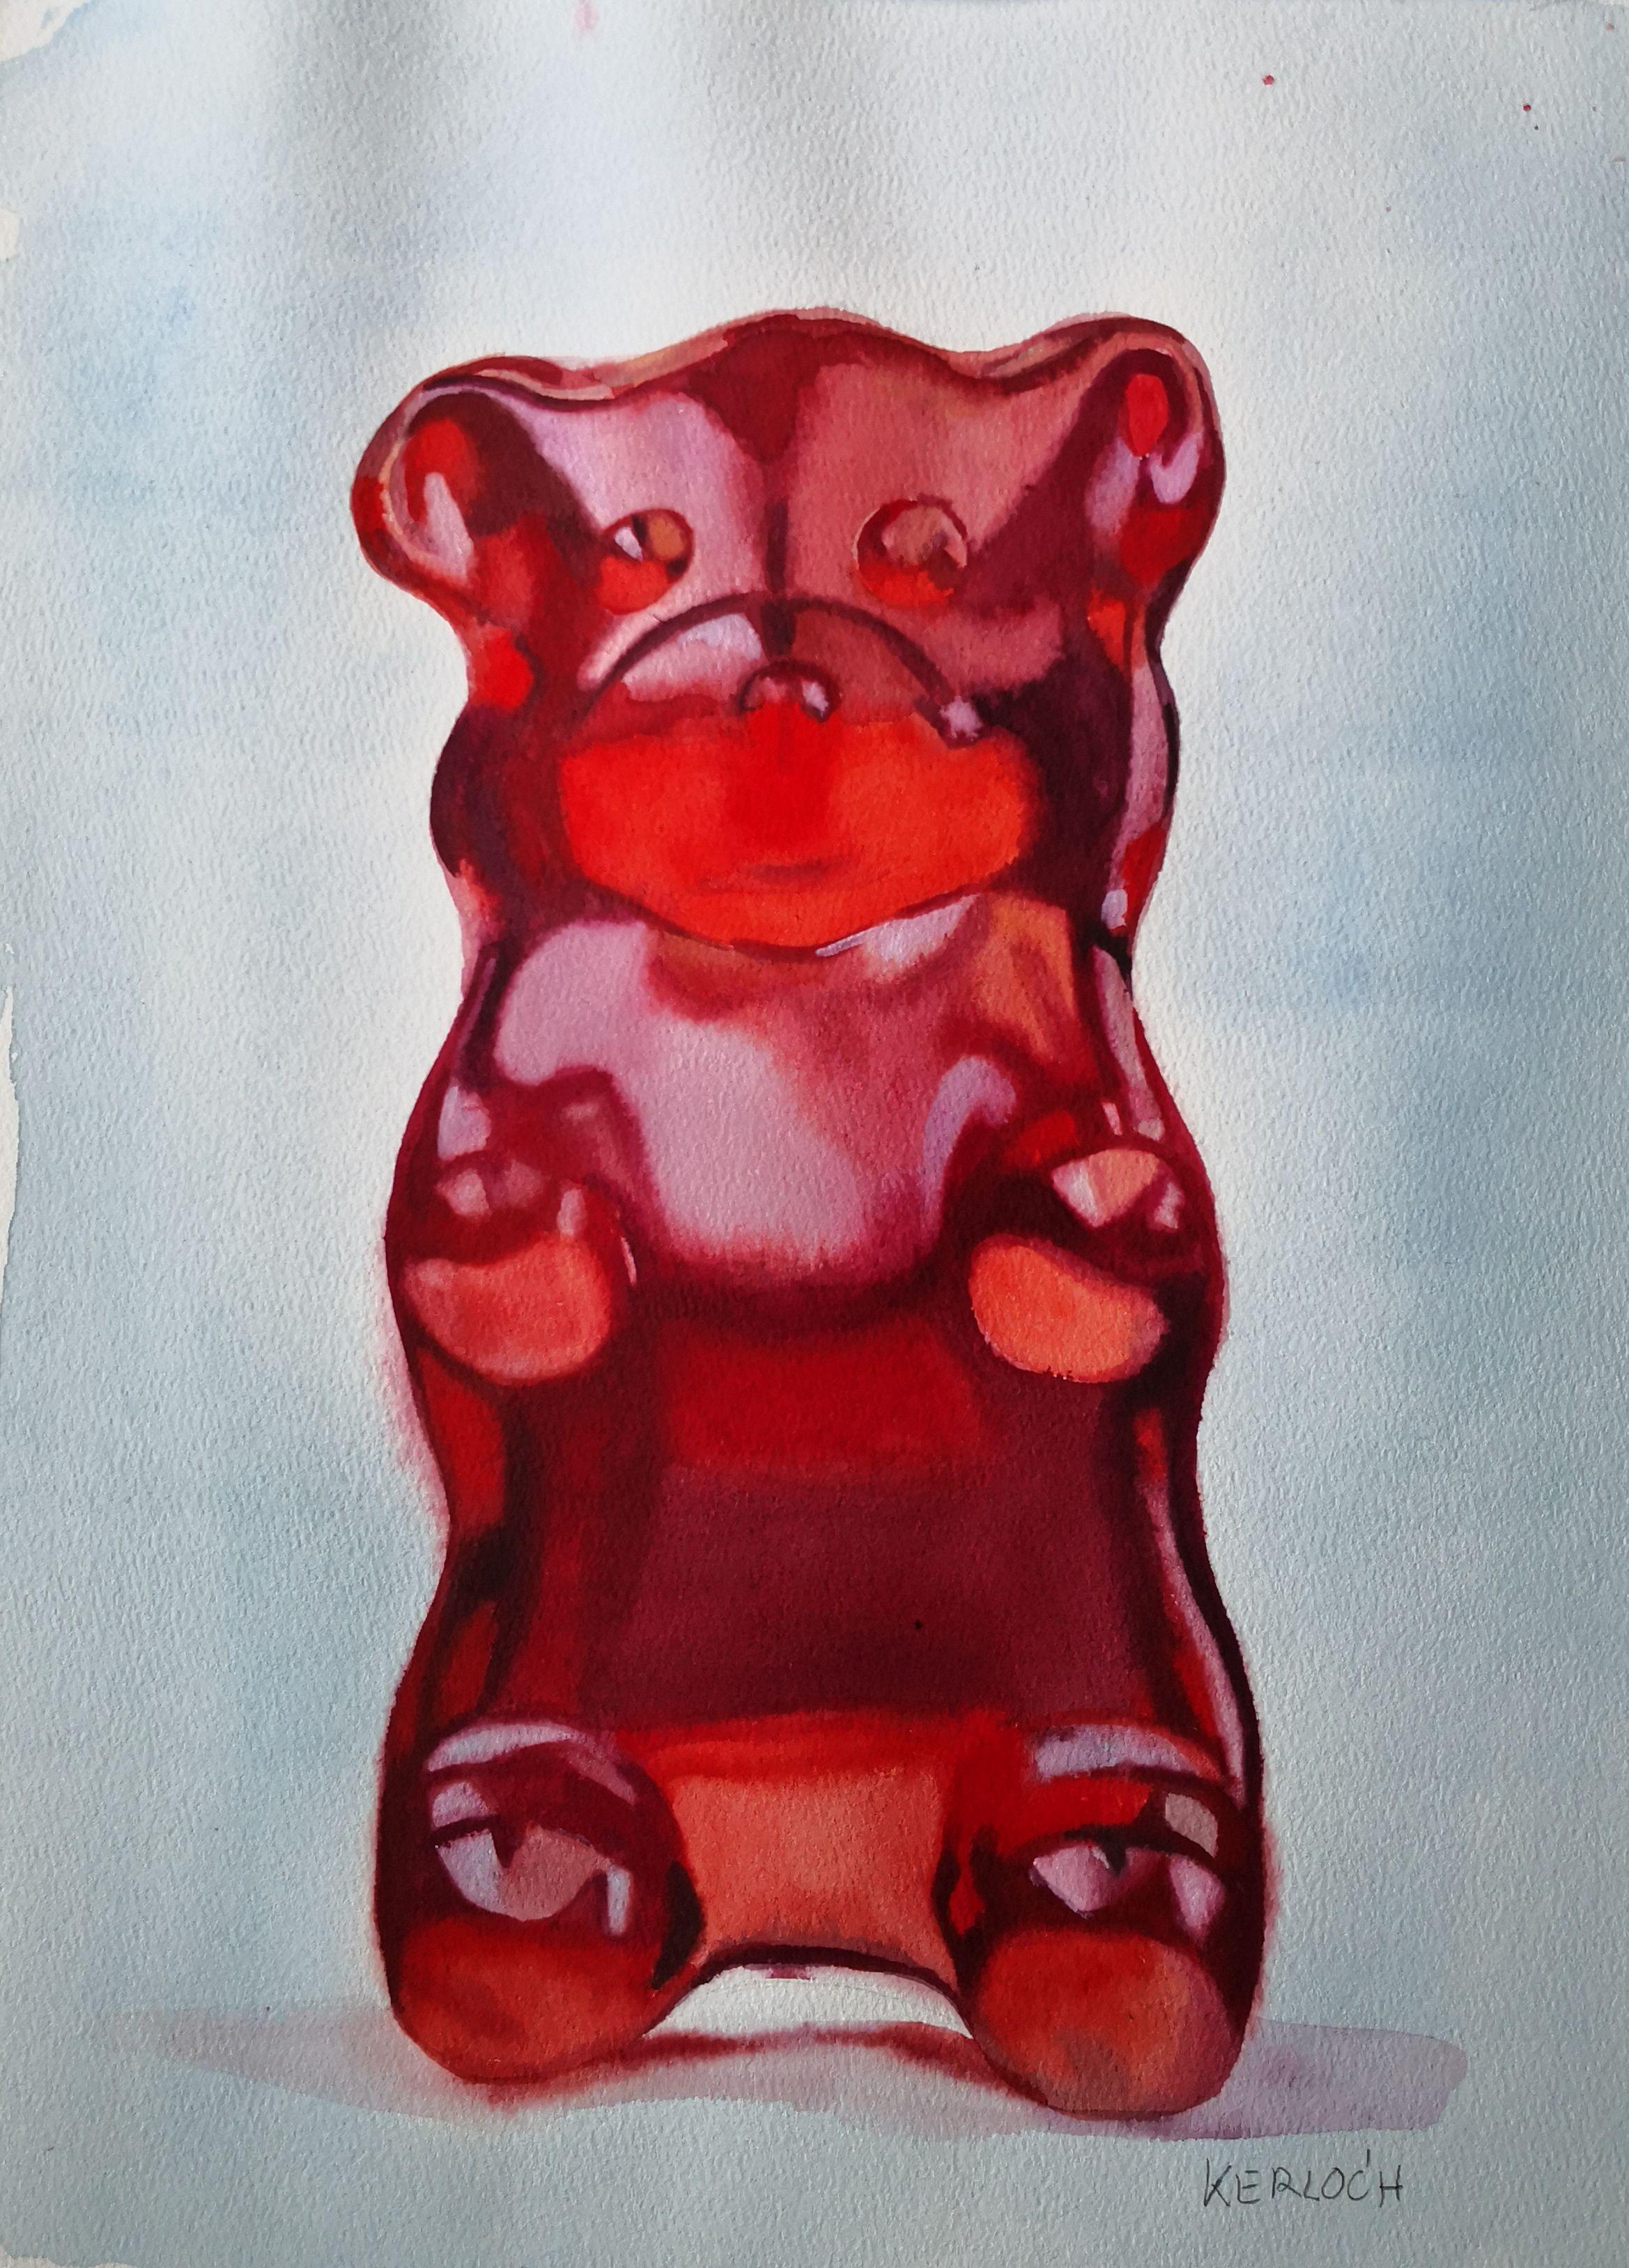 Red Gummy Bear, Painting, Watercolor on Paper - Art by Anyck Alvarez Kerloch